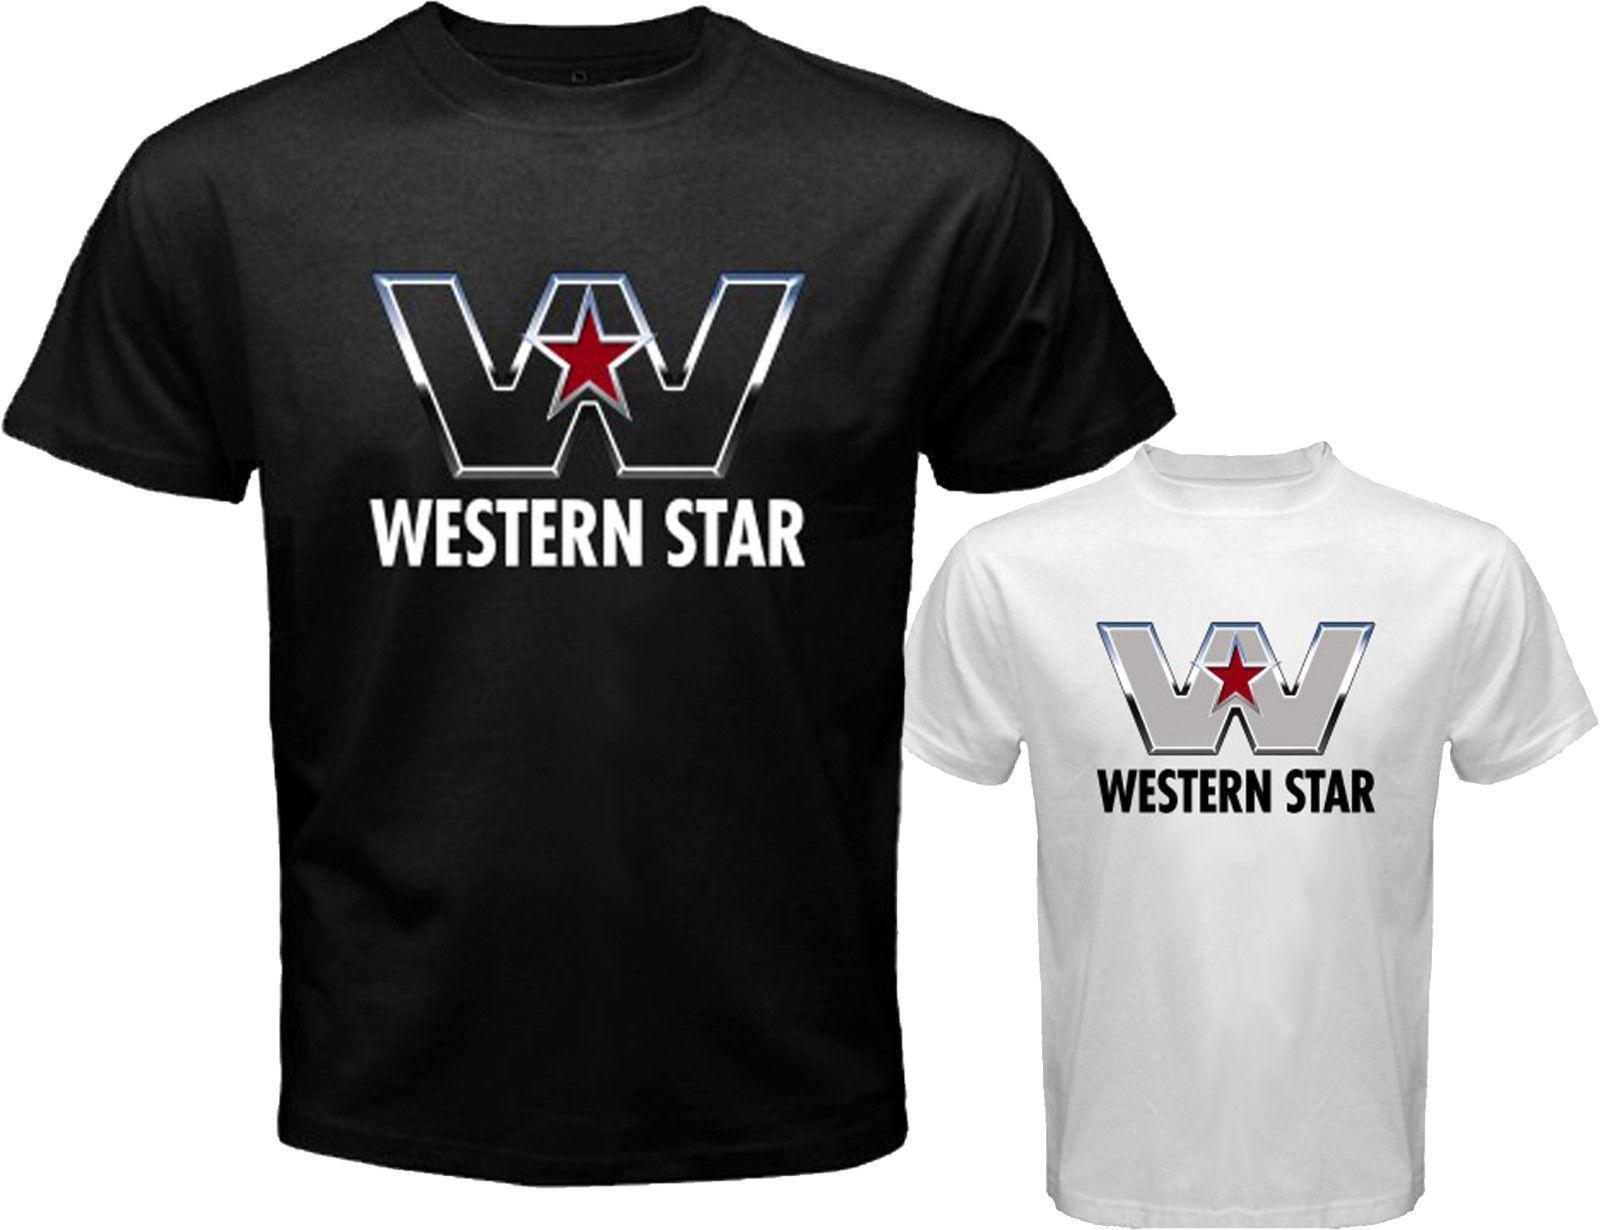 Western Star Trucks Logo - New Western Star Trucks Logo Men'S White Black T Shirt Size S M L XL